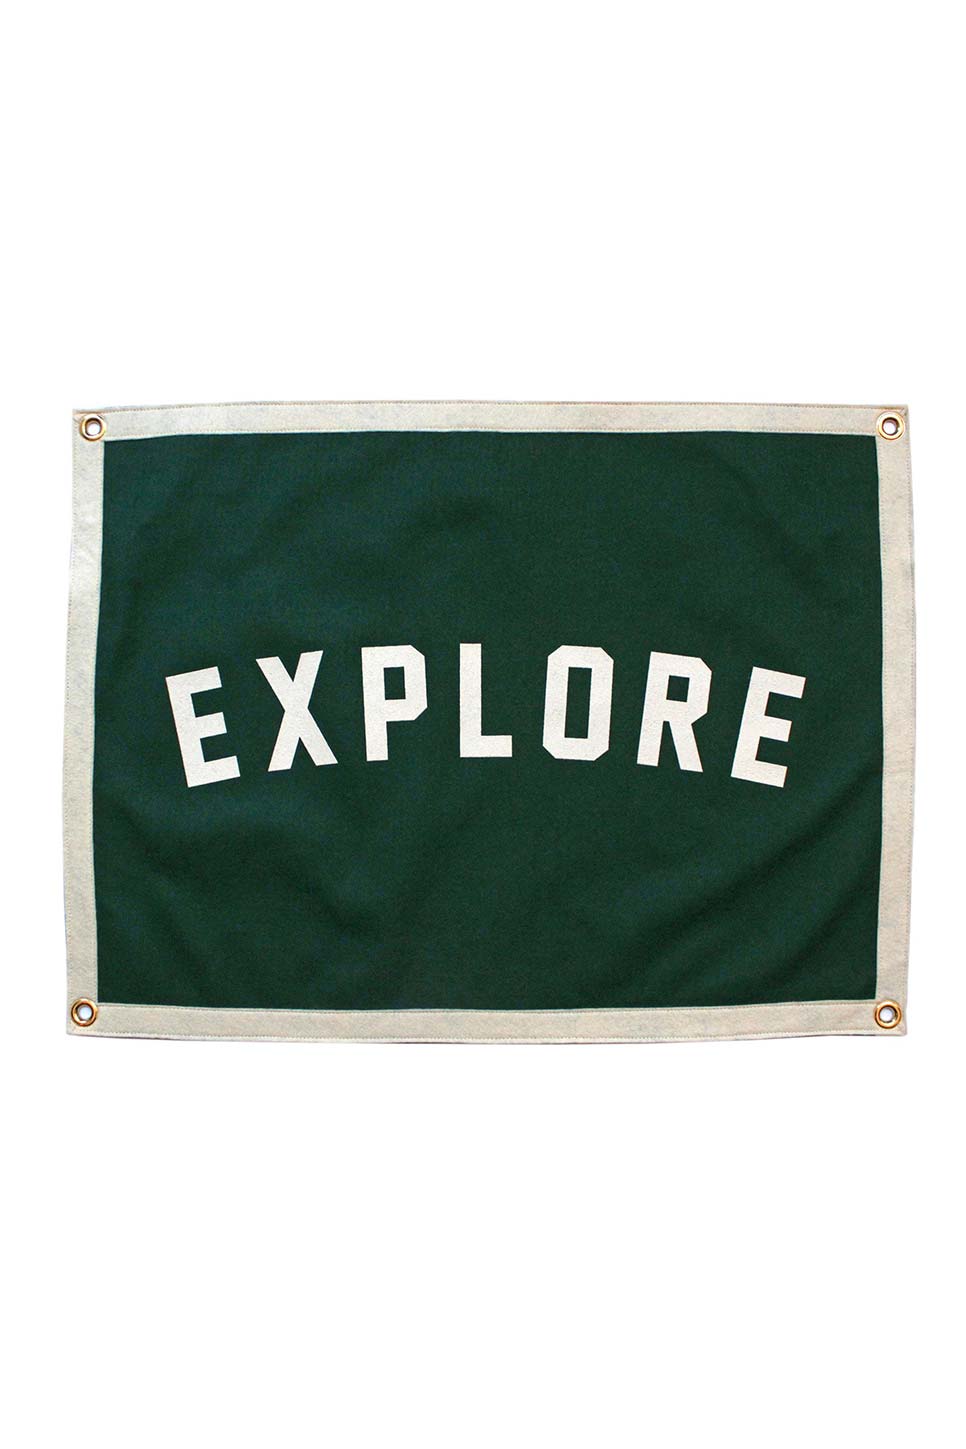 Oxford Pennant - Explore Camp Flag